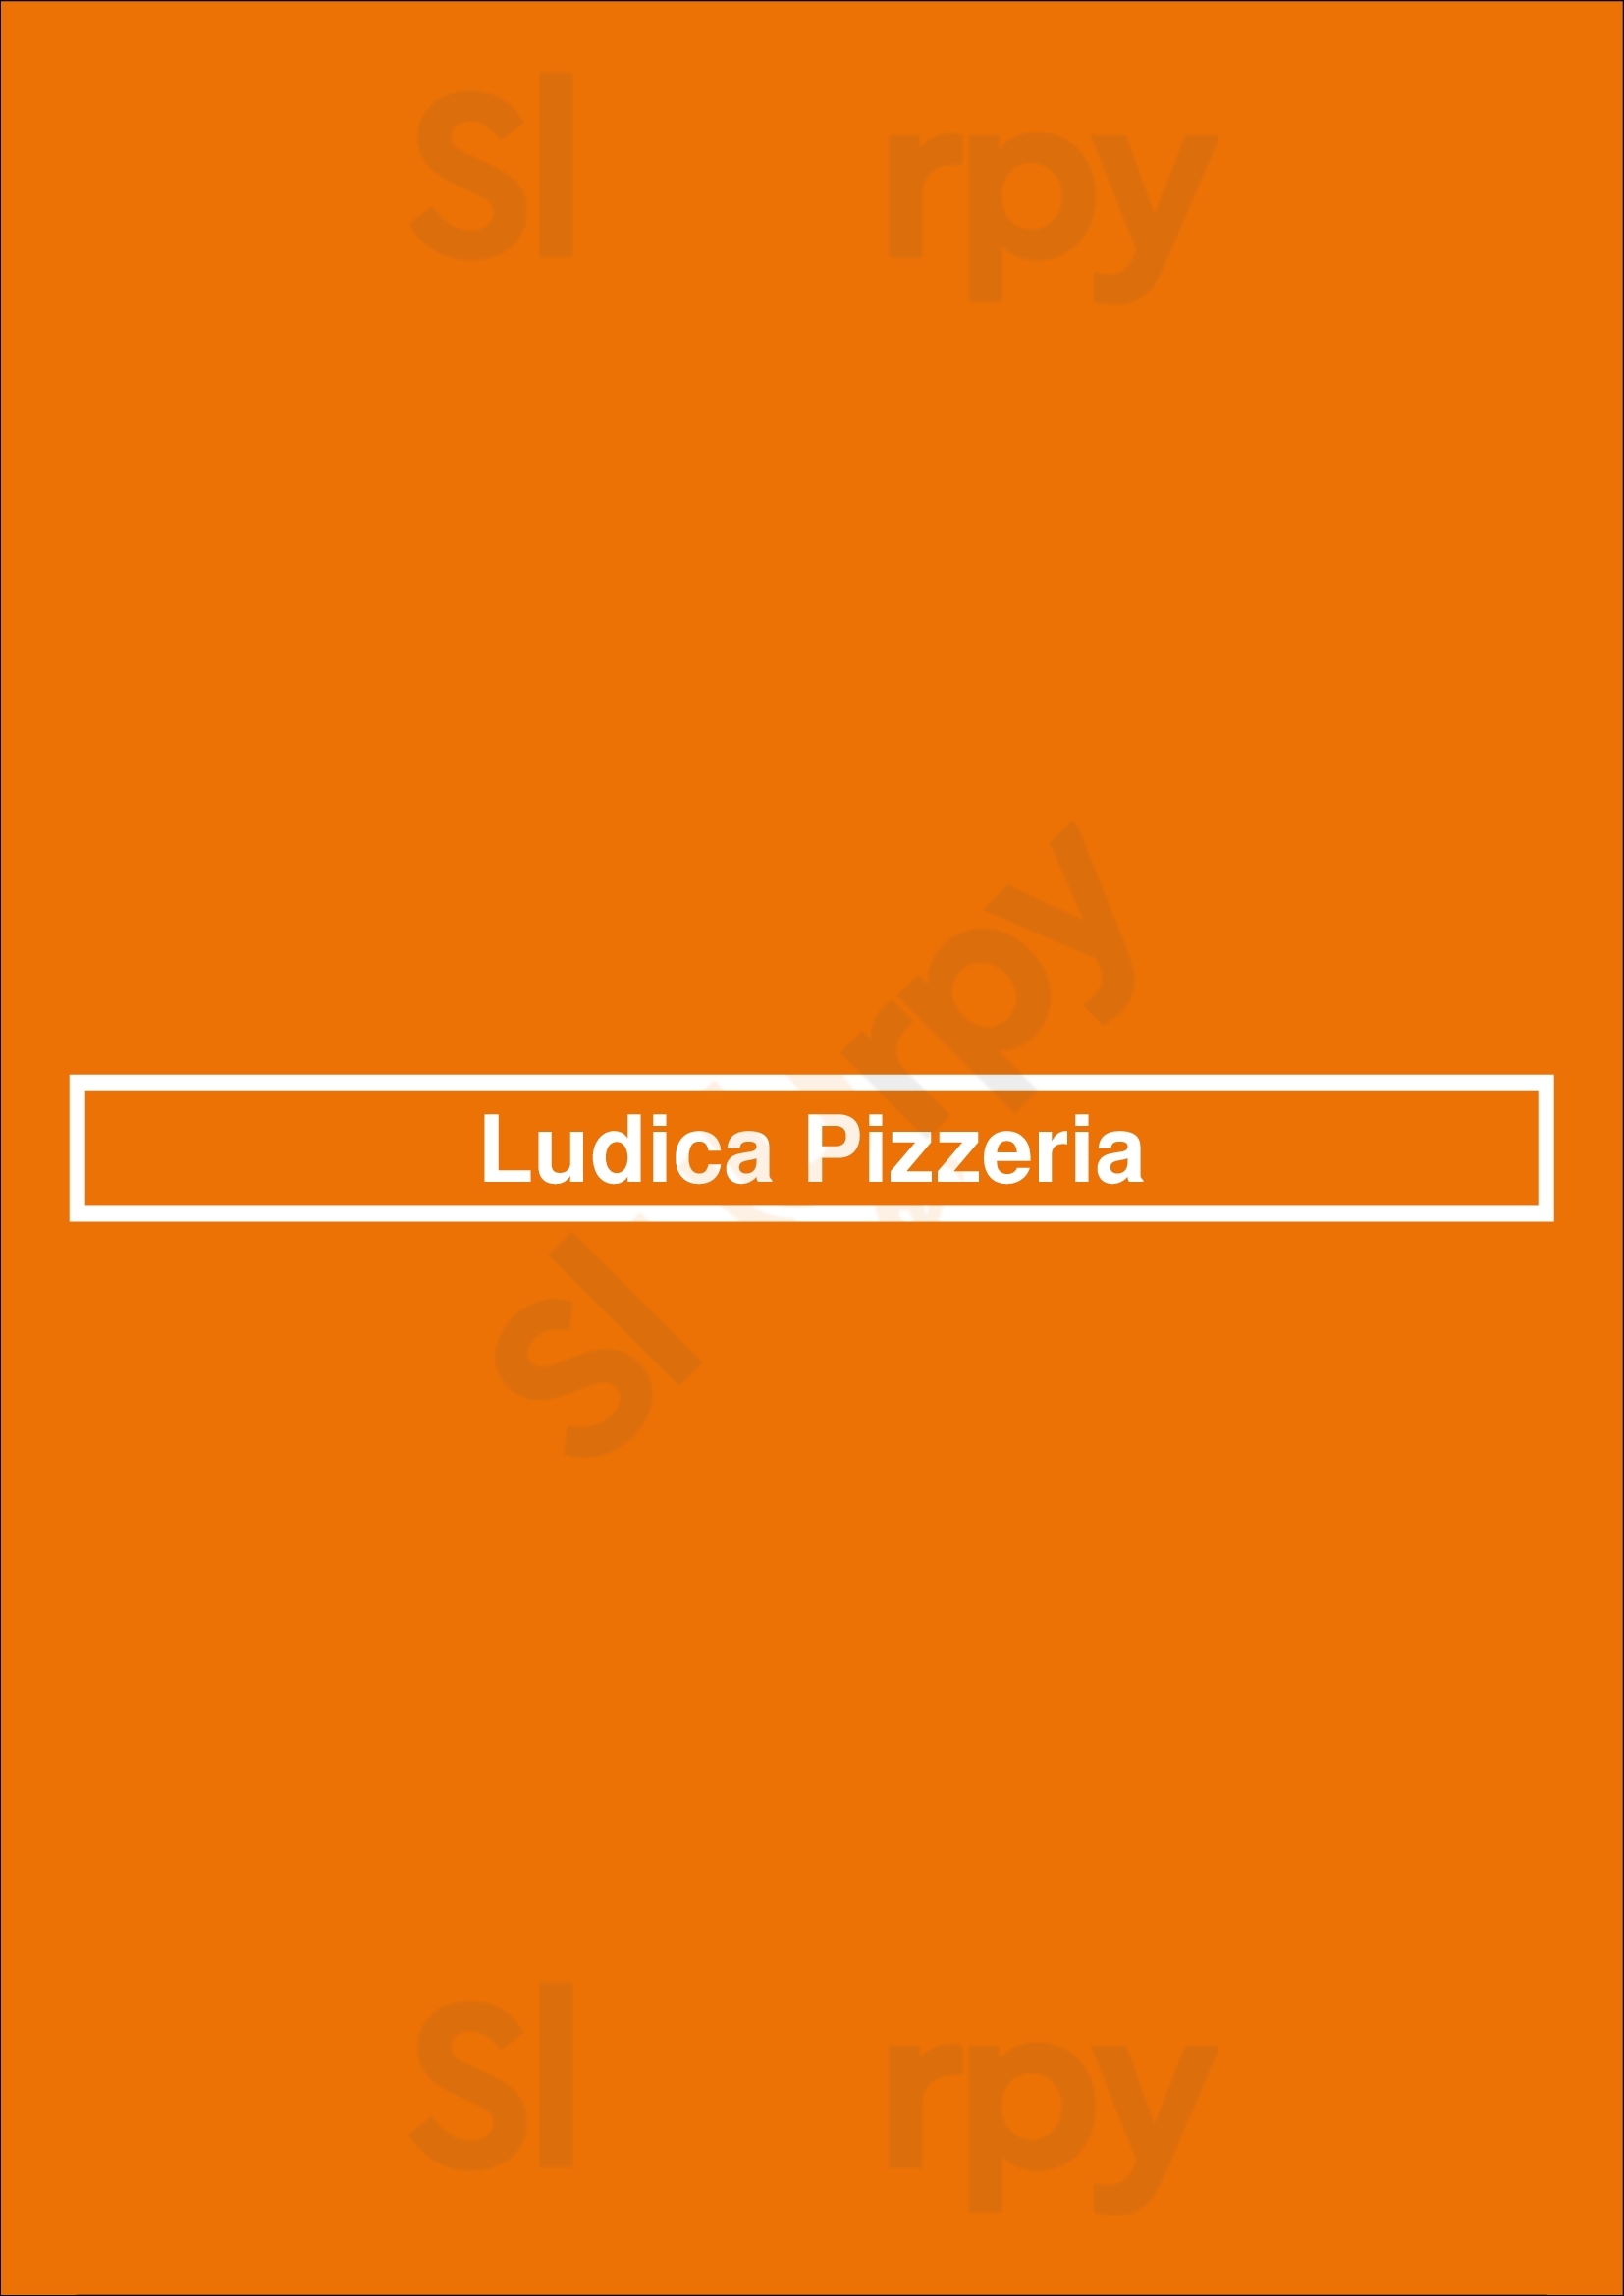 Ludica Pizzeria Vancouver Menu - 1